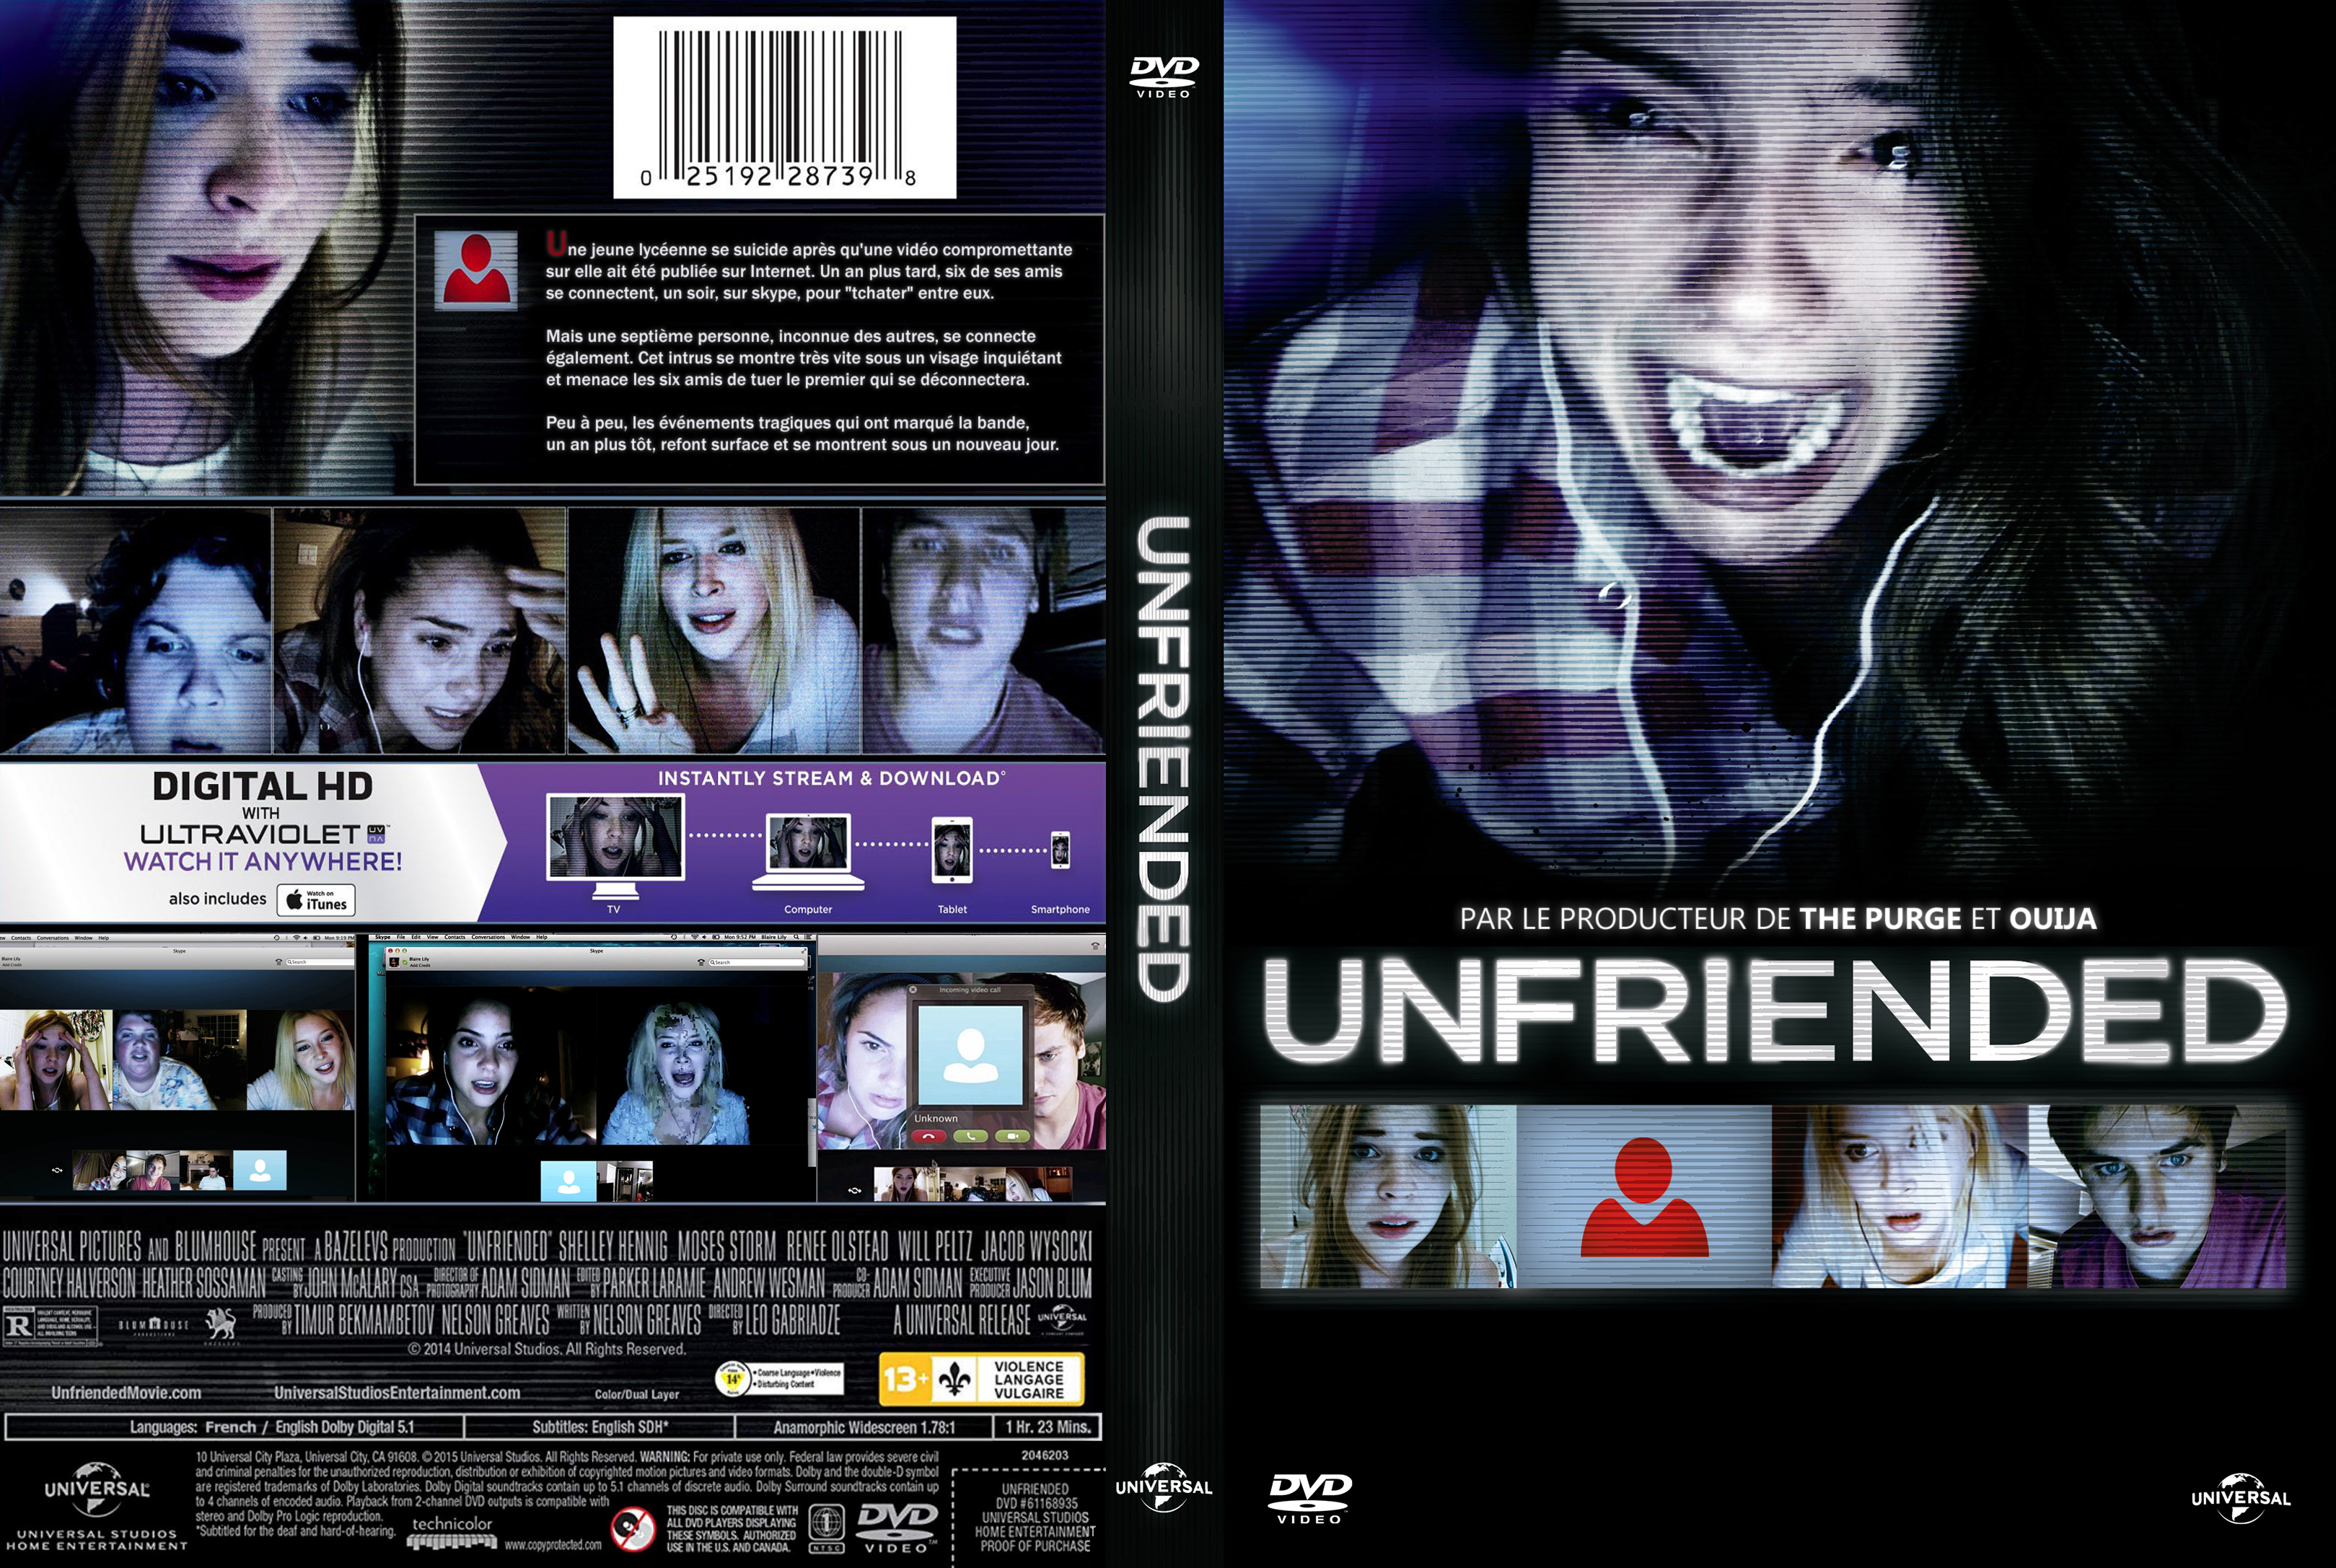 Jaquette DVD Unfriended custom